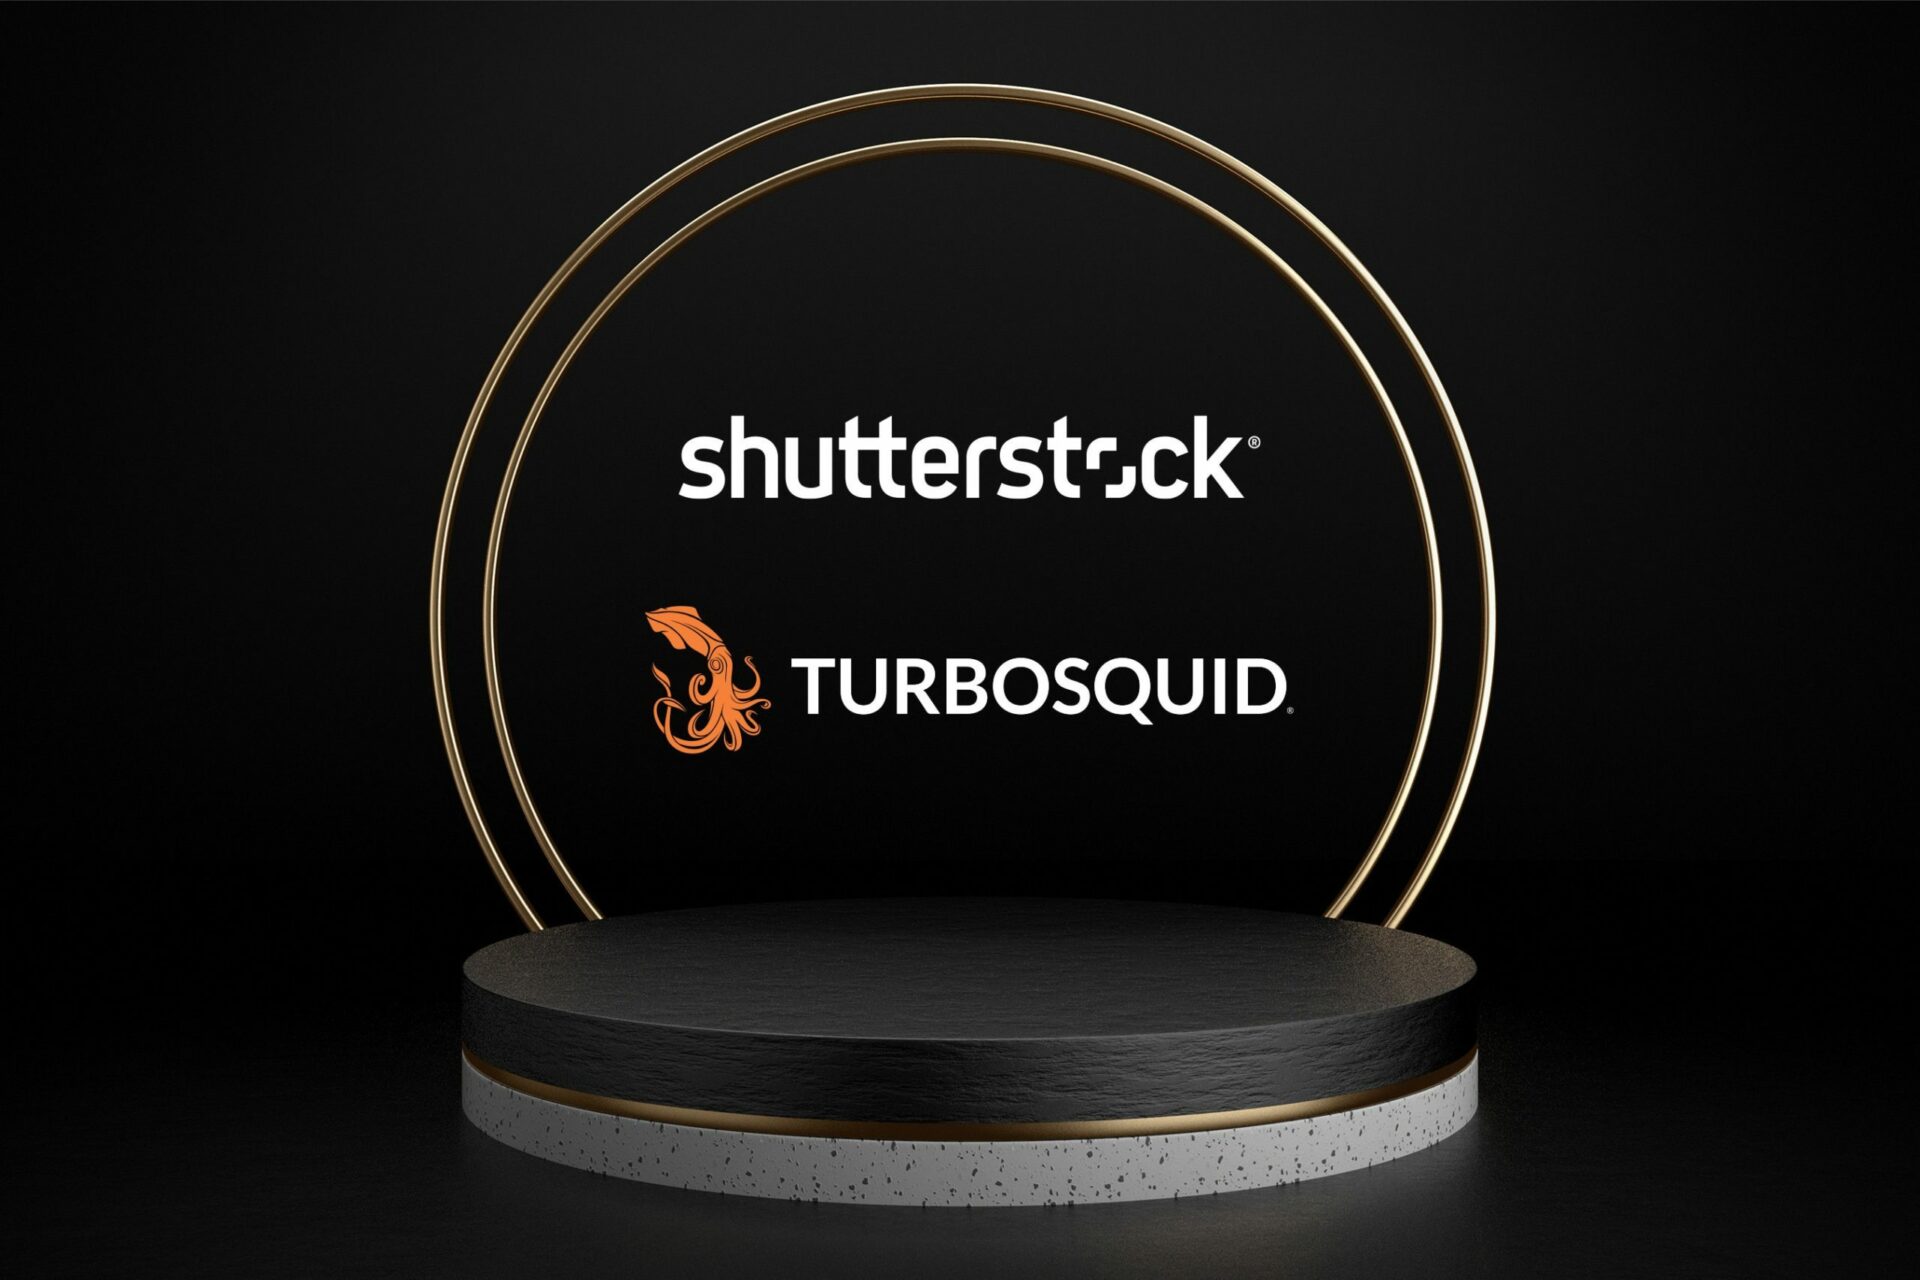 TurboSquid by Shutterstock